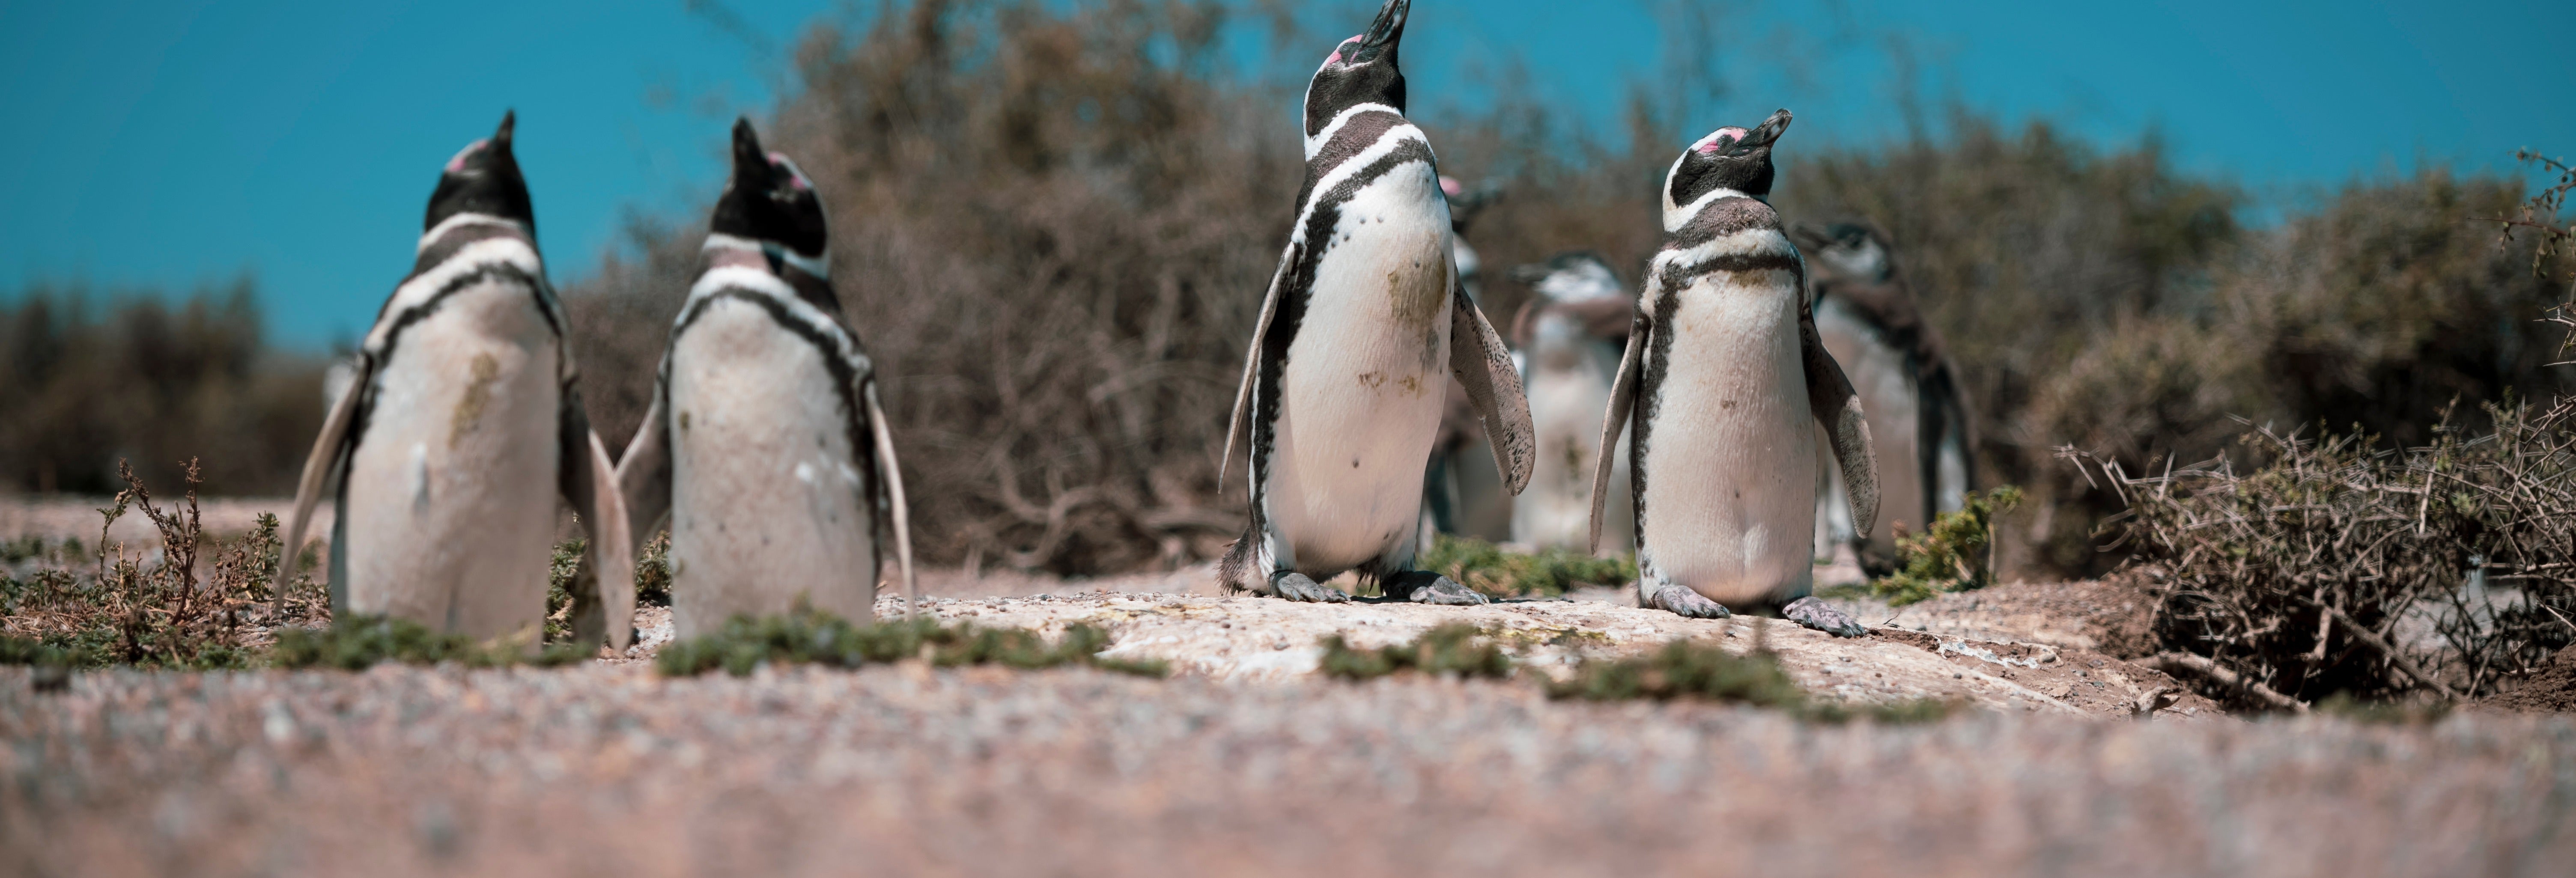 Estância El Pedral e avistamento de pinguins